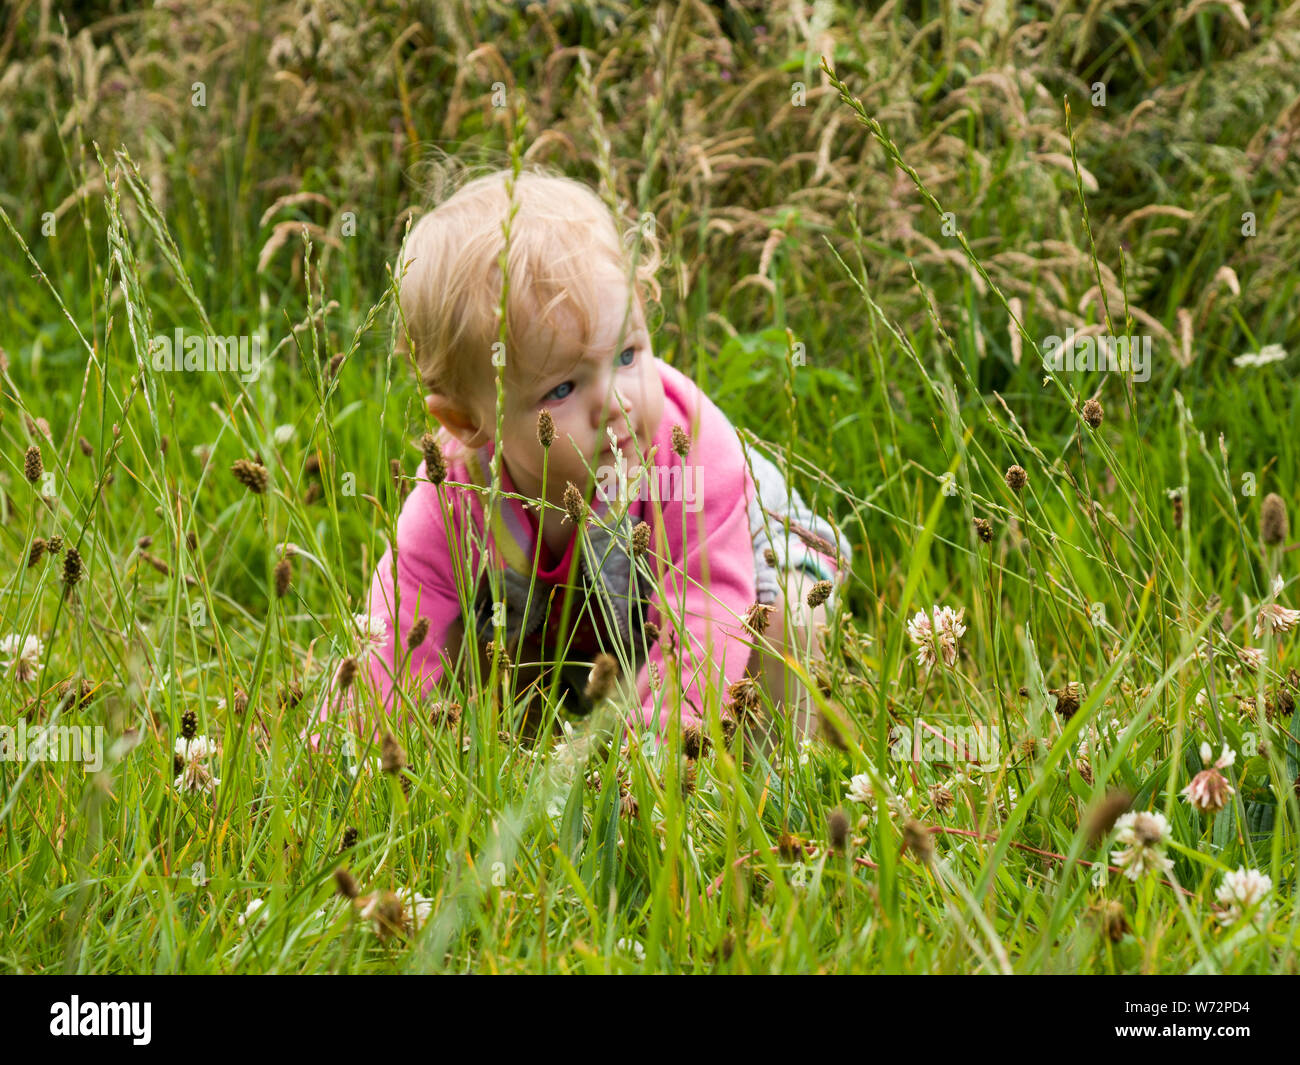 File:Portugal (Lisbon) Beautiful little girl playing Hide and Seek game  (35739006586).jpg - Wikimedia Commons